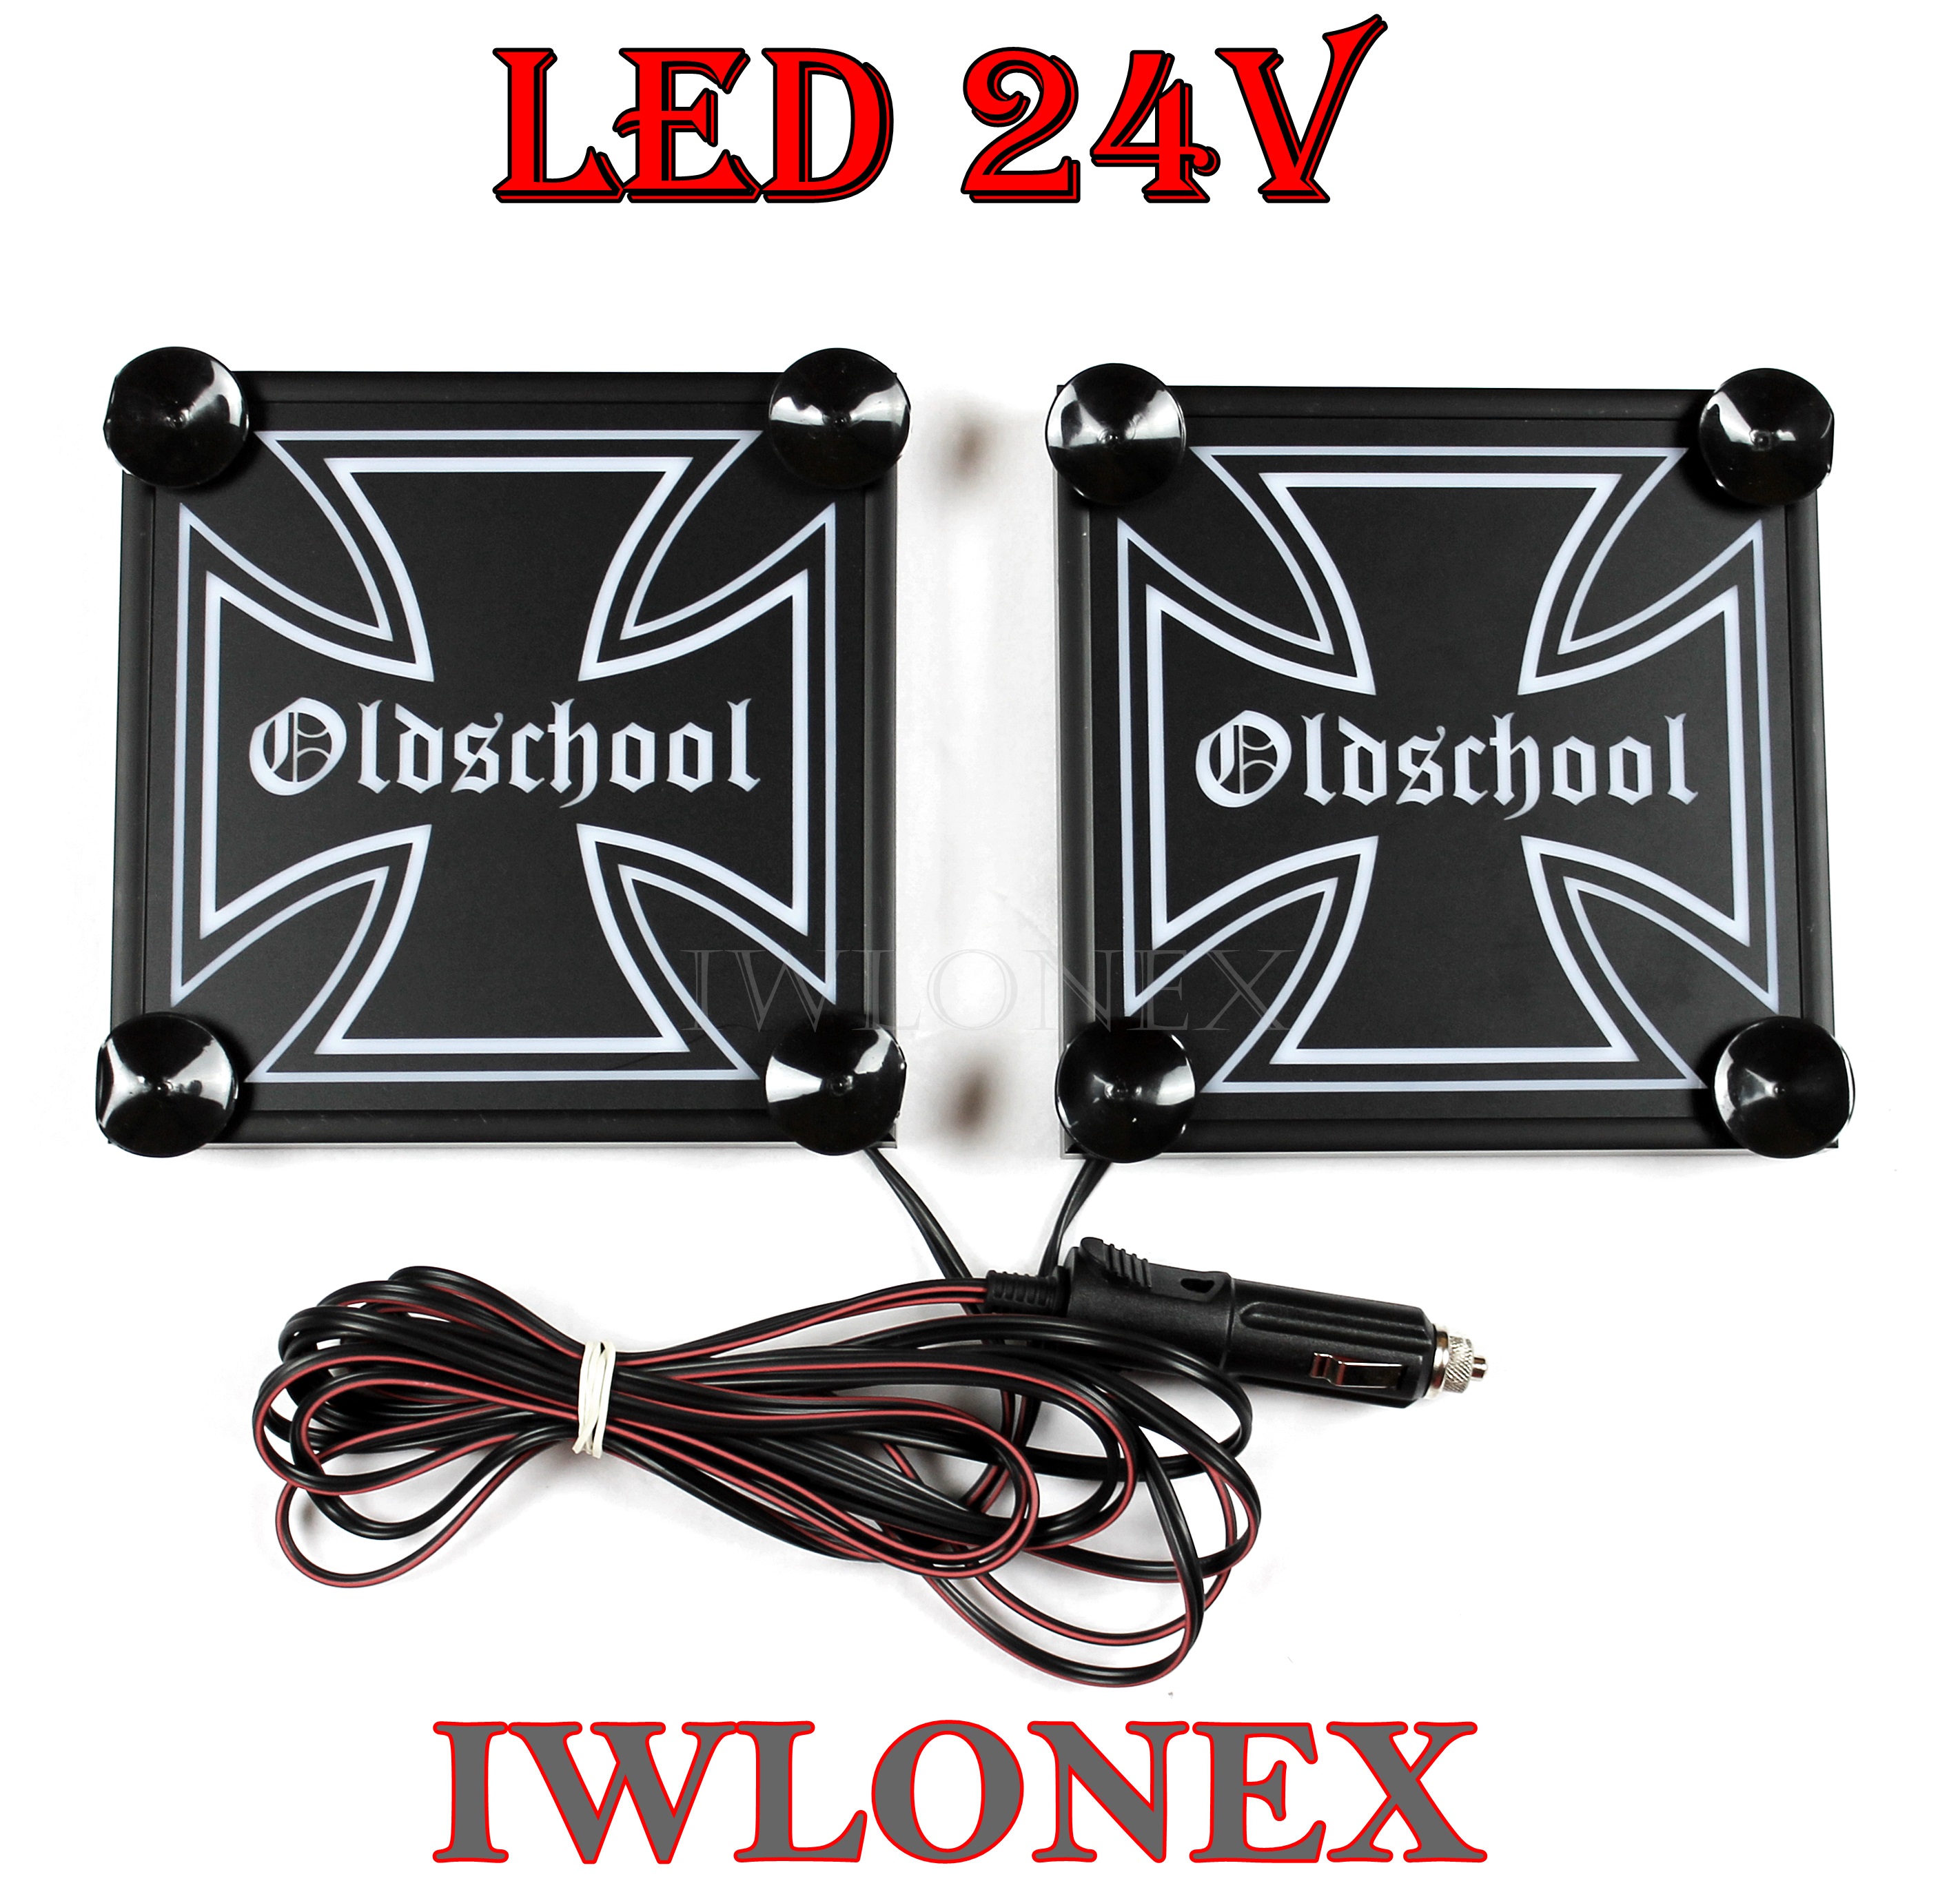 1 Paar LKW LED Leuchtschilder 24V King of the Road - Iwlonex